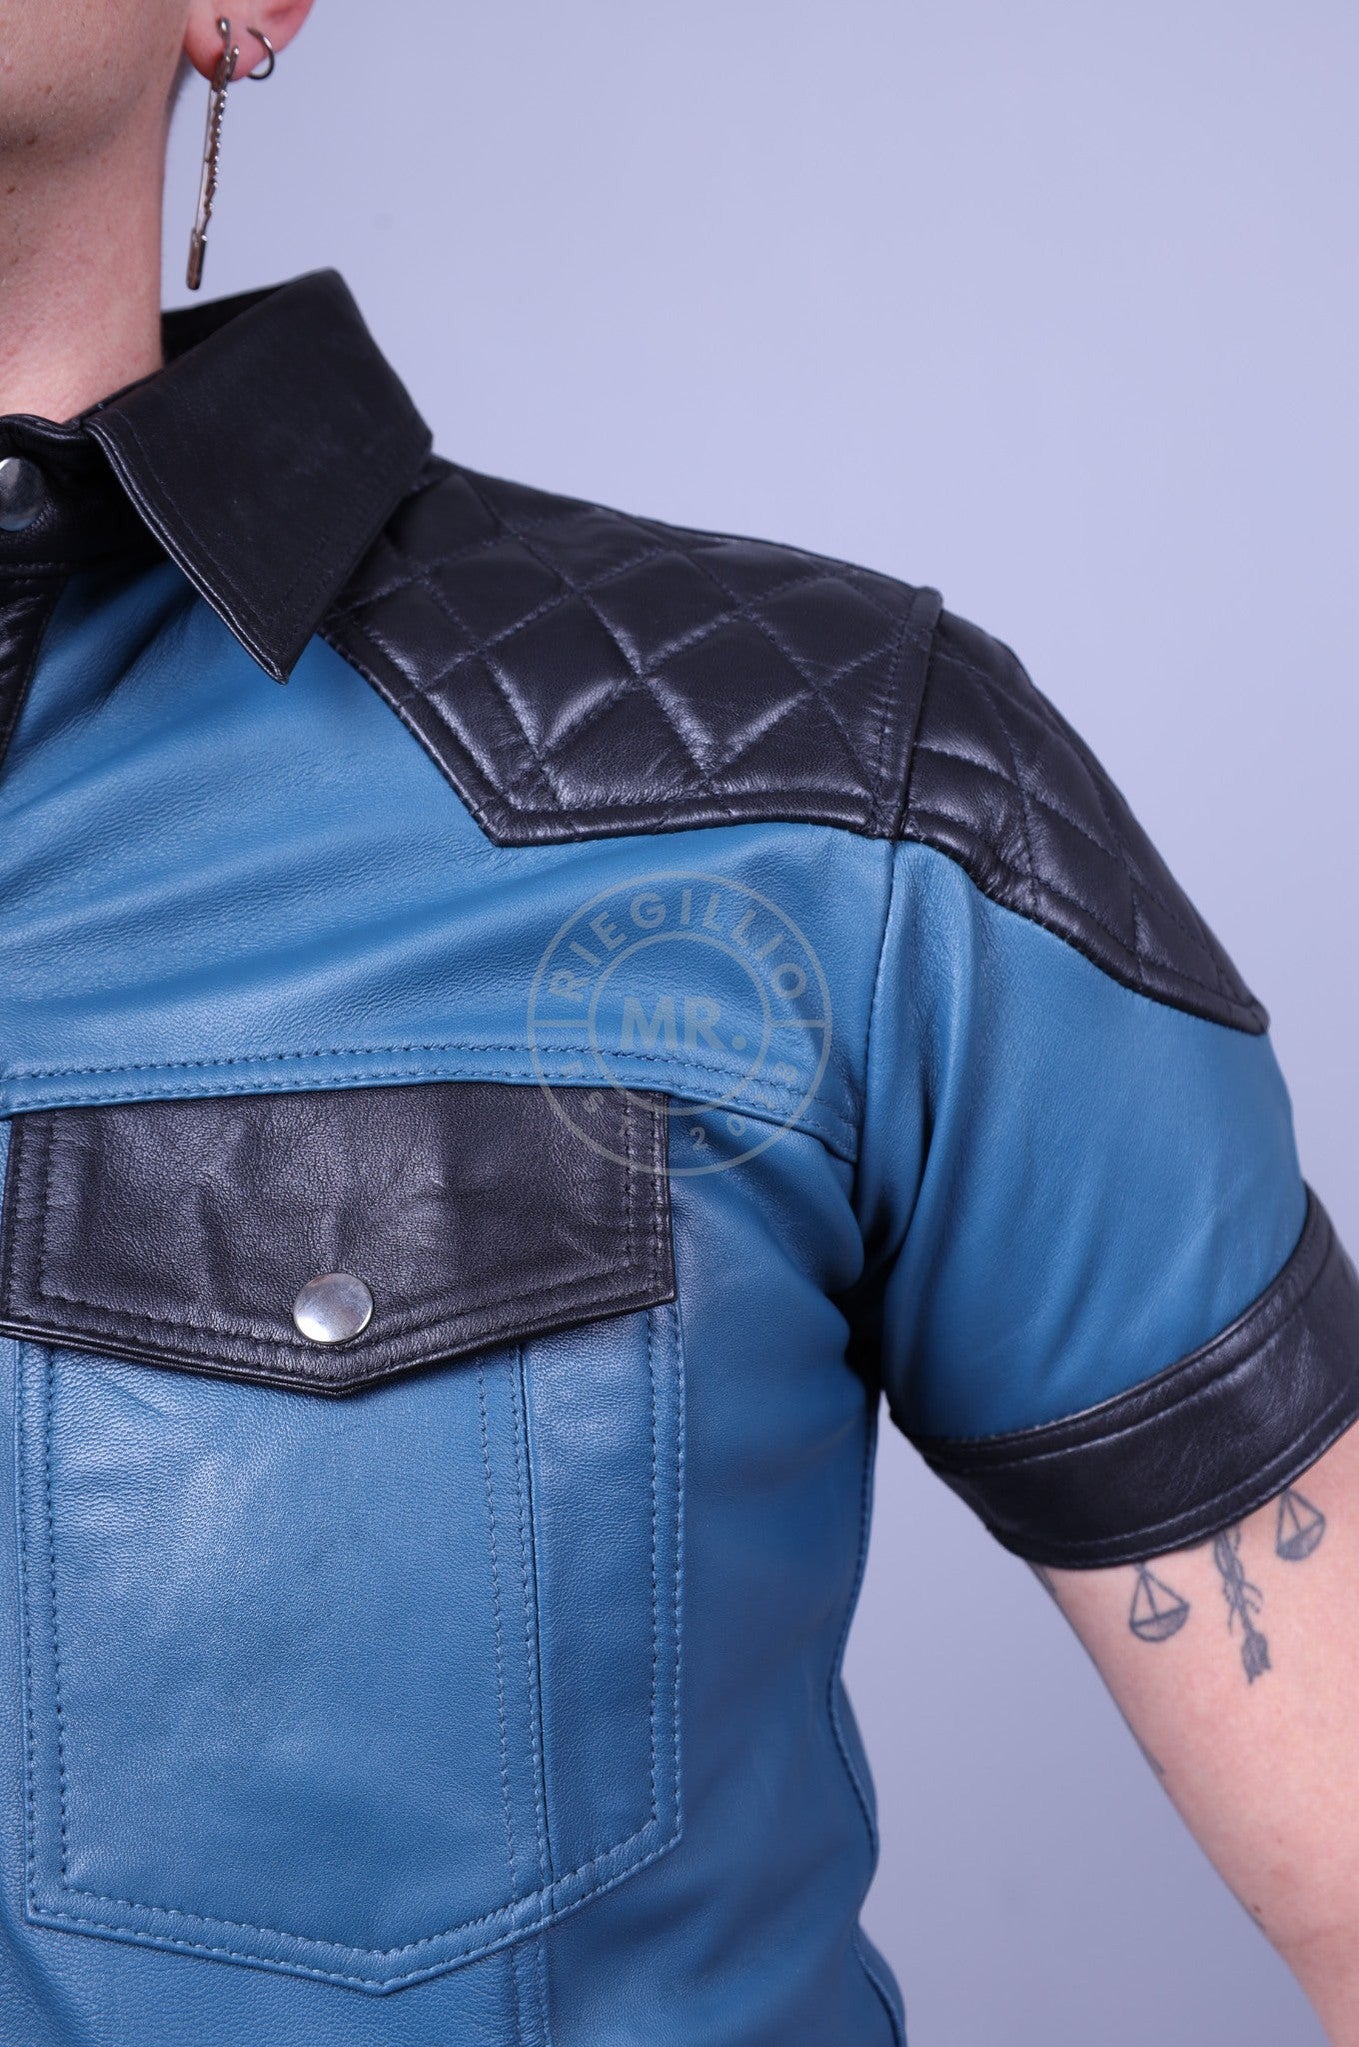 Jeans Blue Leather Shirt with Black Padding at MR. Riegillio